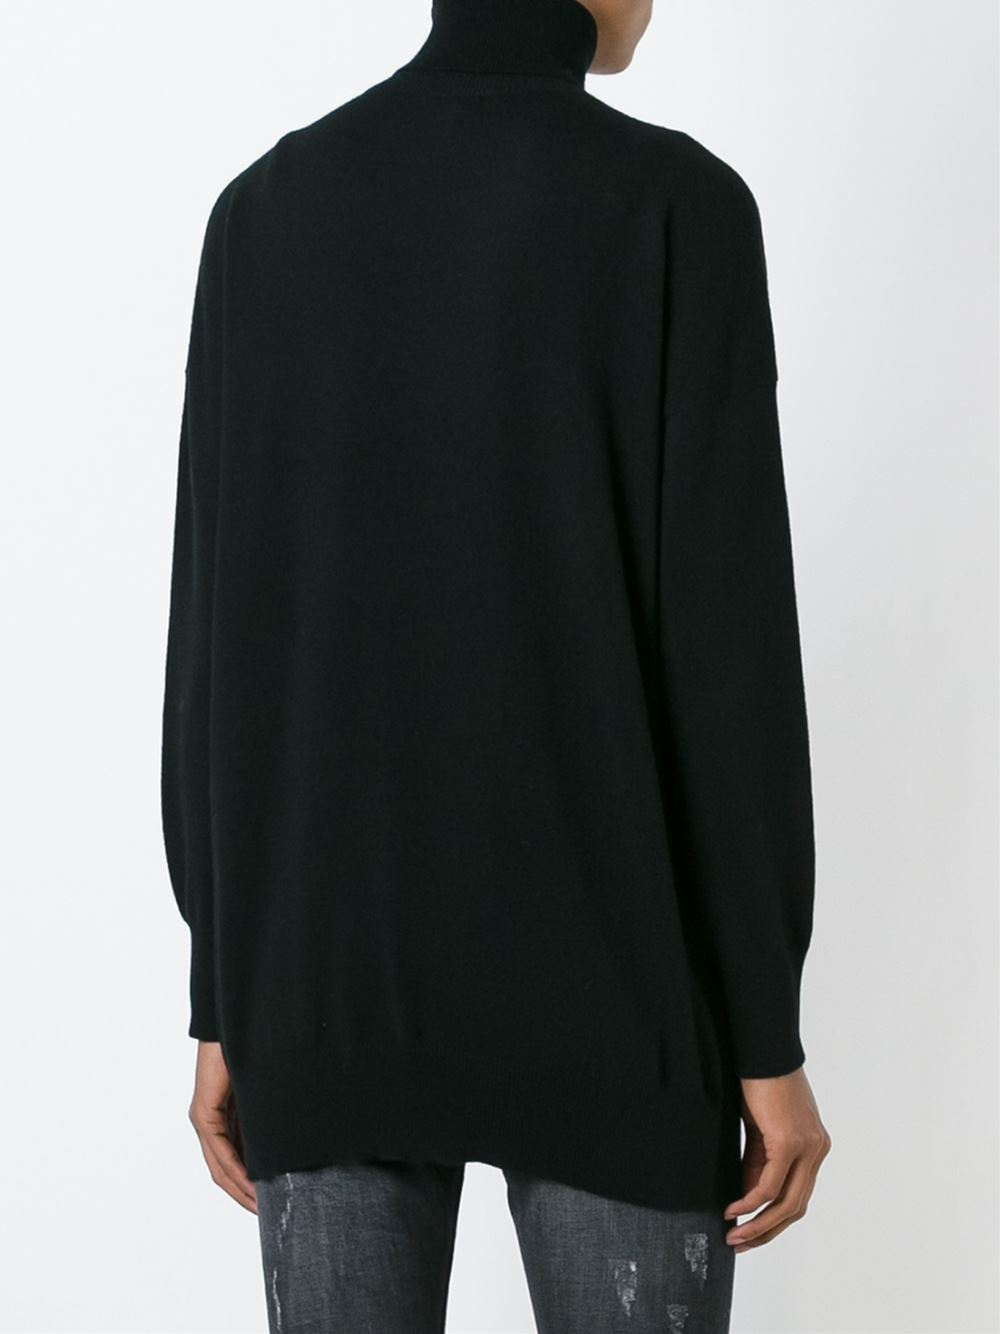 Lyst - Gucci Cashmere Sweater in Black